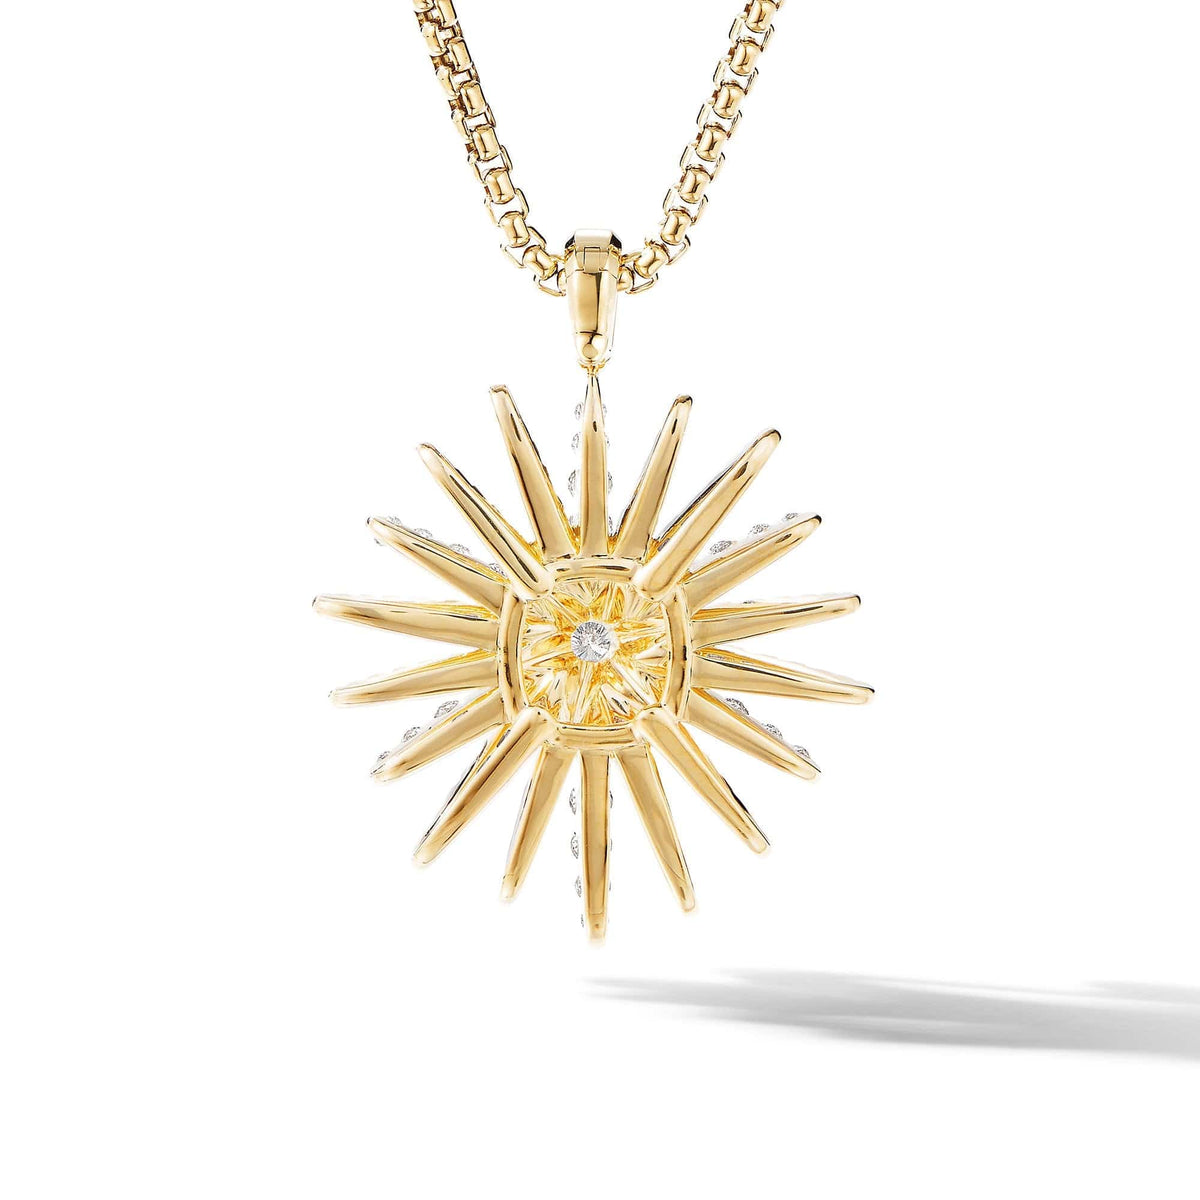 Starburst Pendant in 18K Yellow Gold with Full Pavé Diamonds